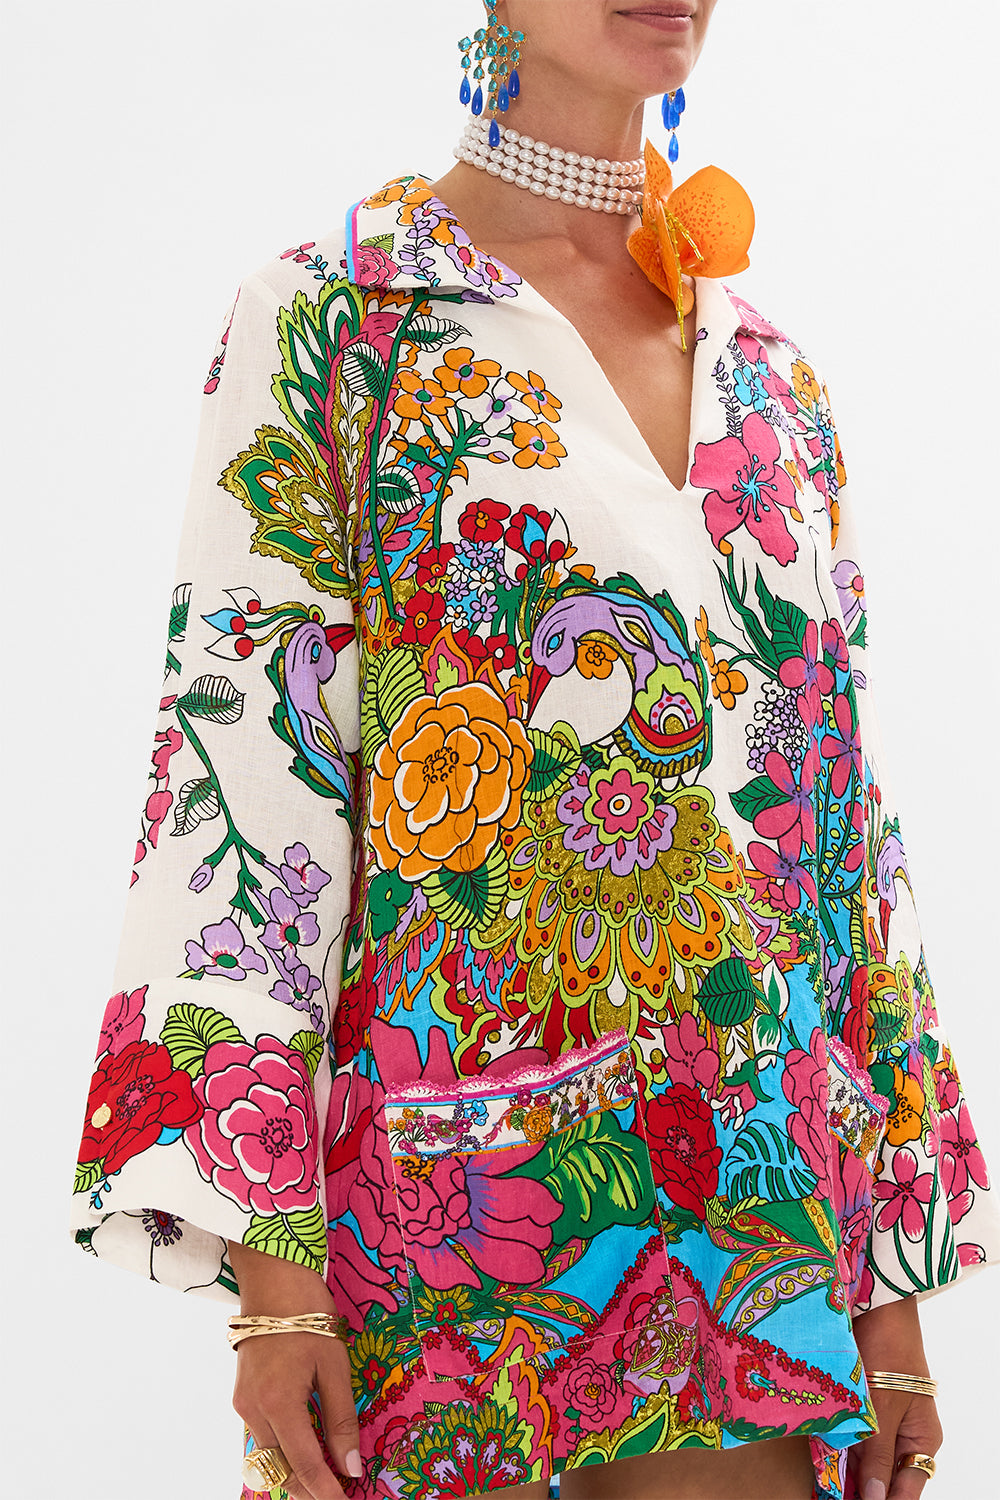 CAMILLA retro floral tunic dress in Cosmic Prairie print. 